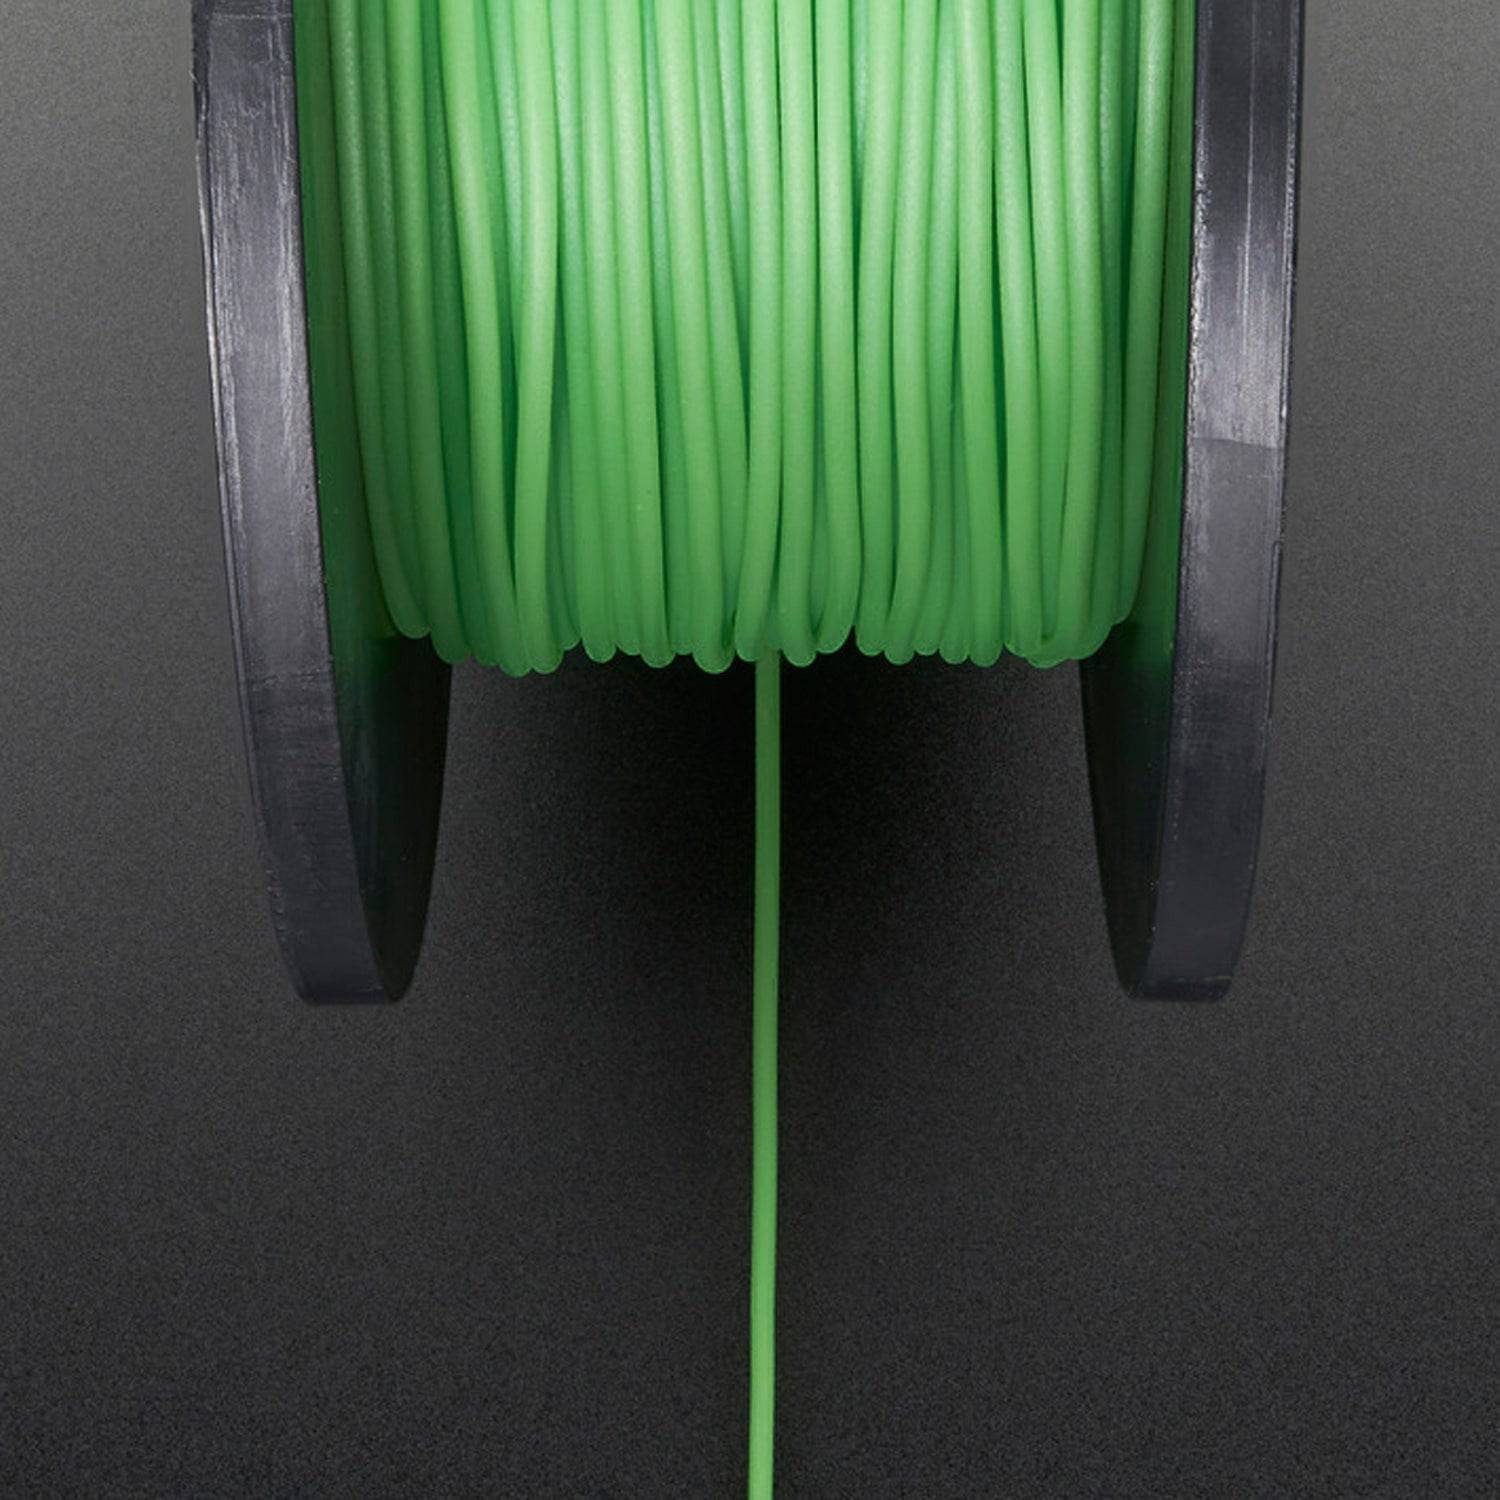 1 KG 1.75mm Green 3D Printer ABS Filament For 3D Printer - RS254 - REES52